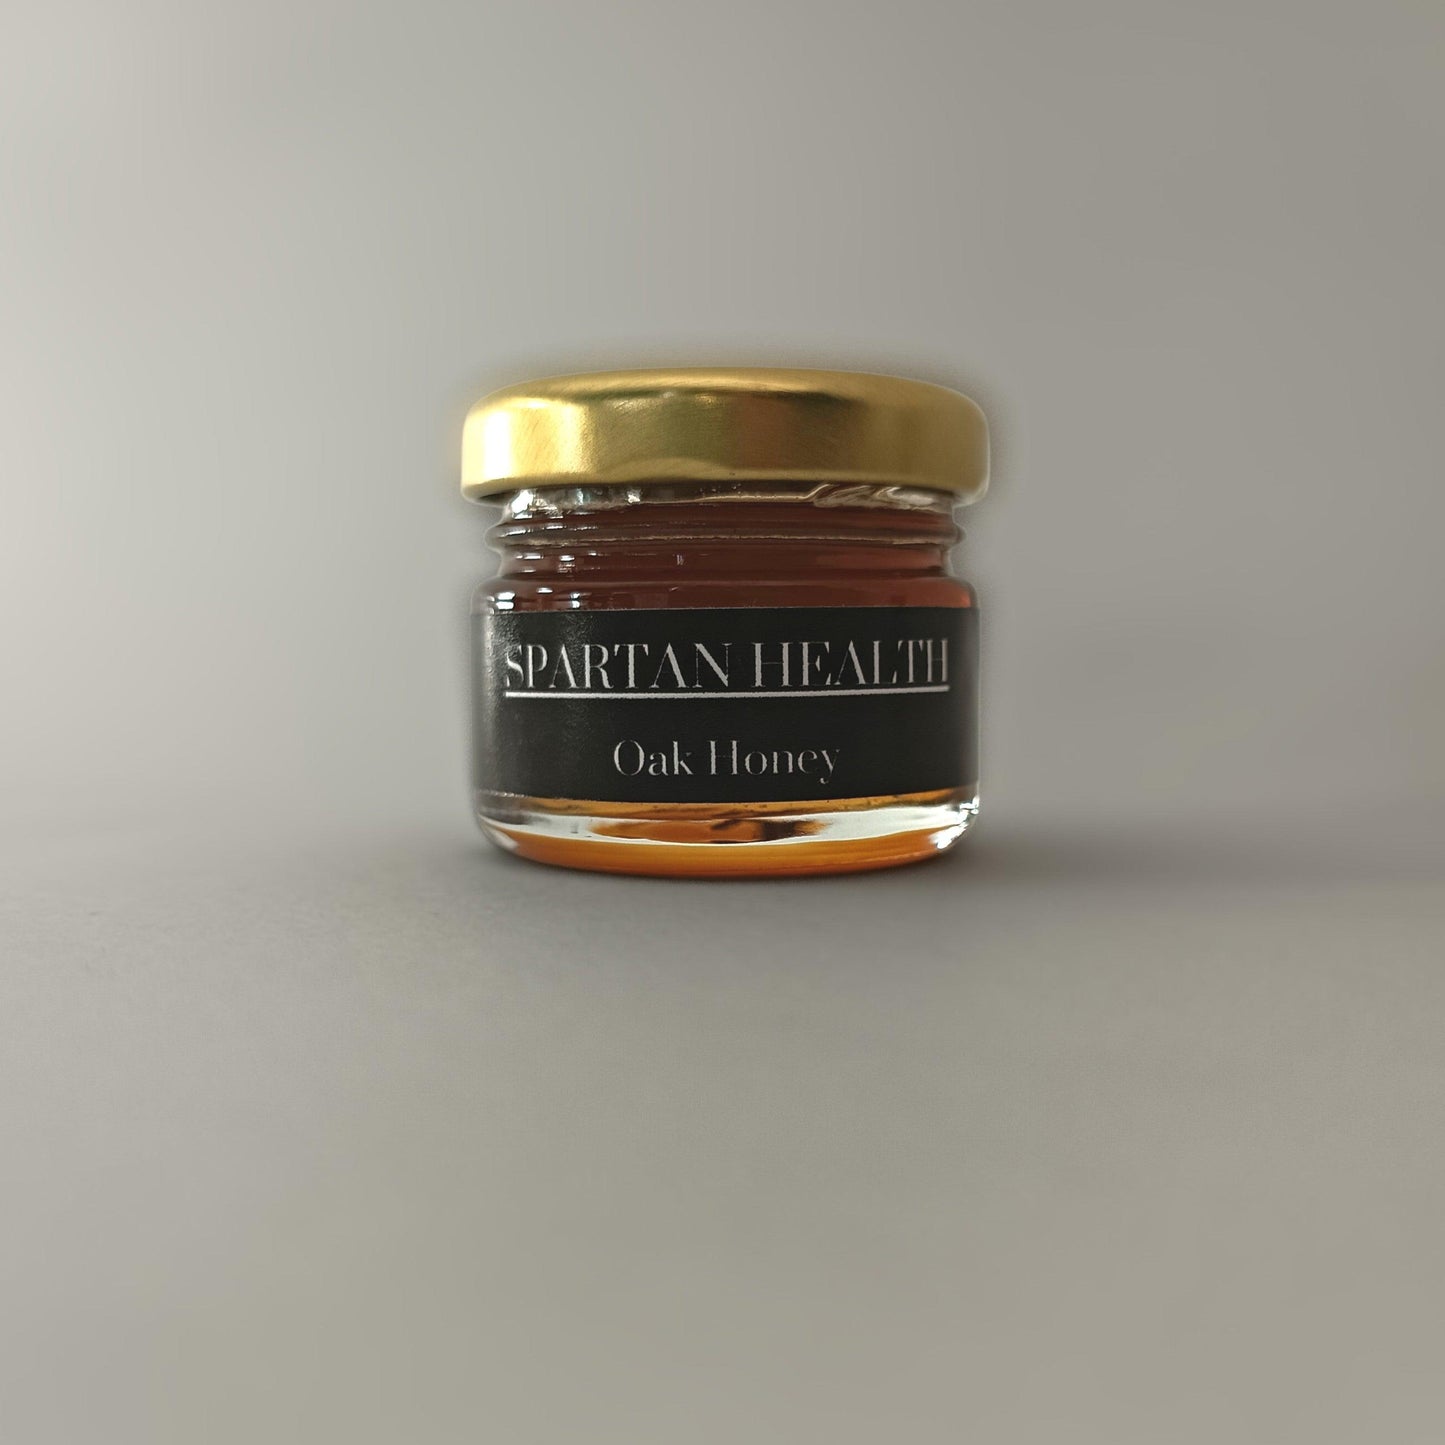 Spartan Honey™ - Spartan Health™